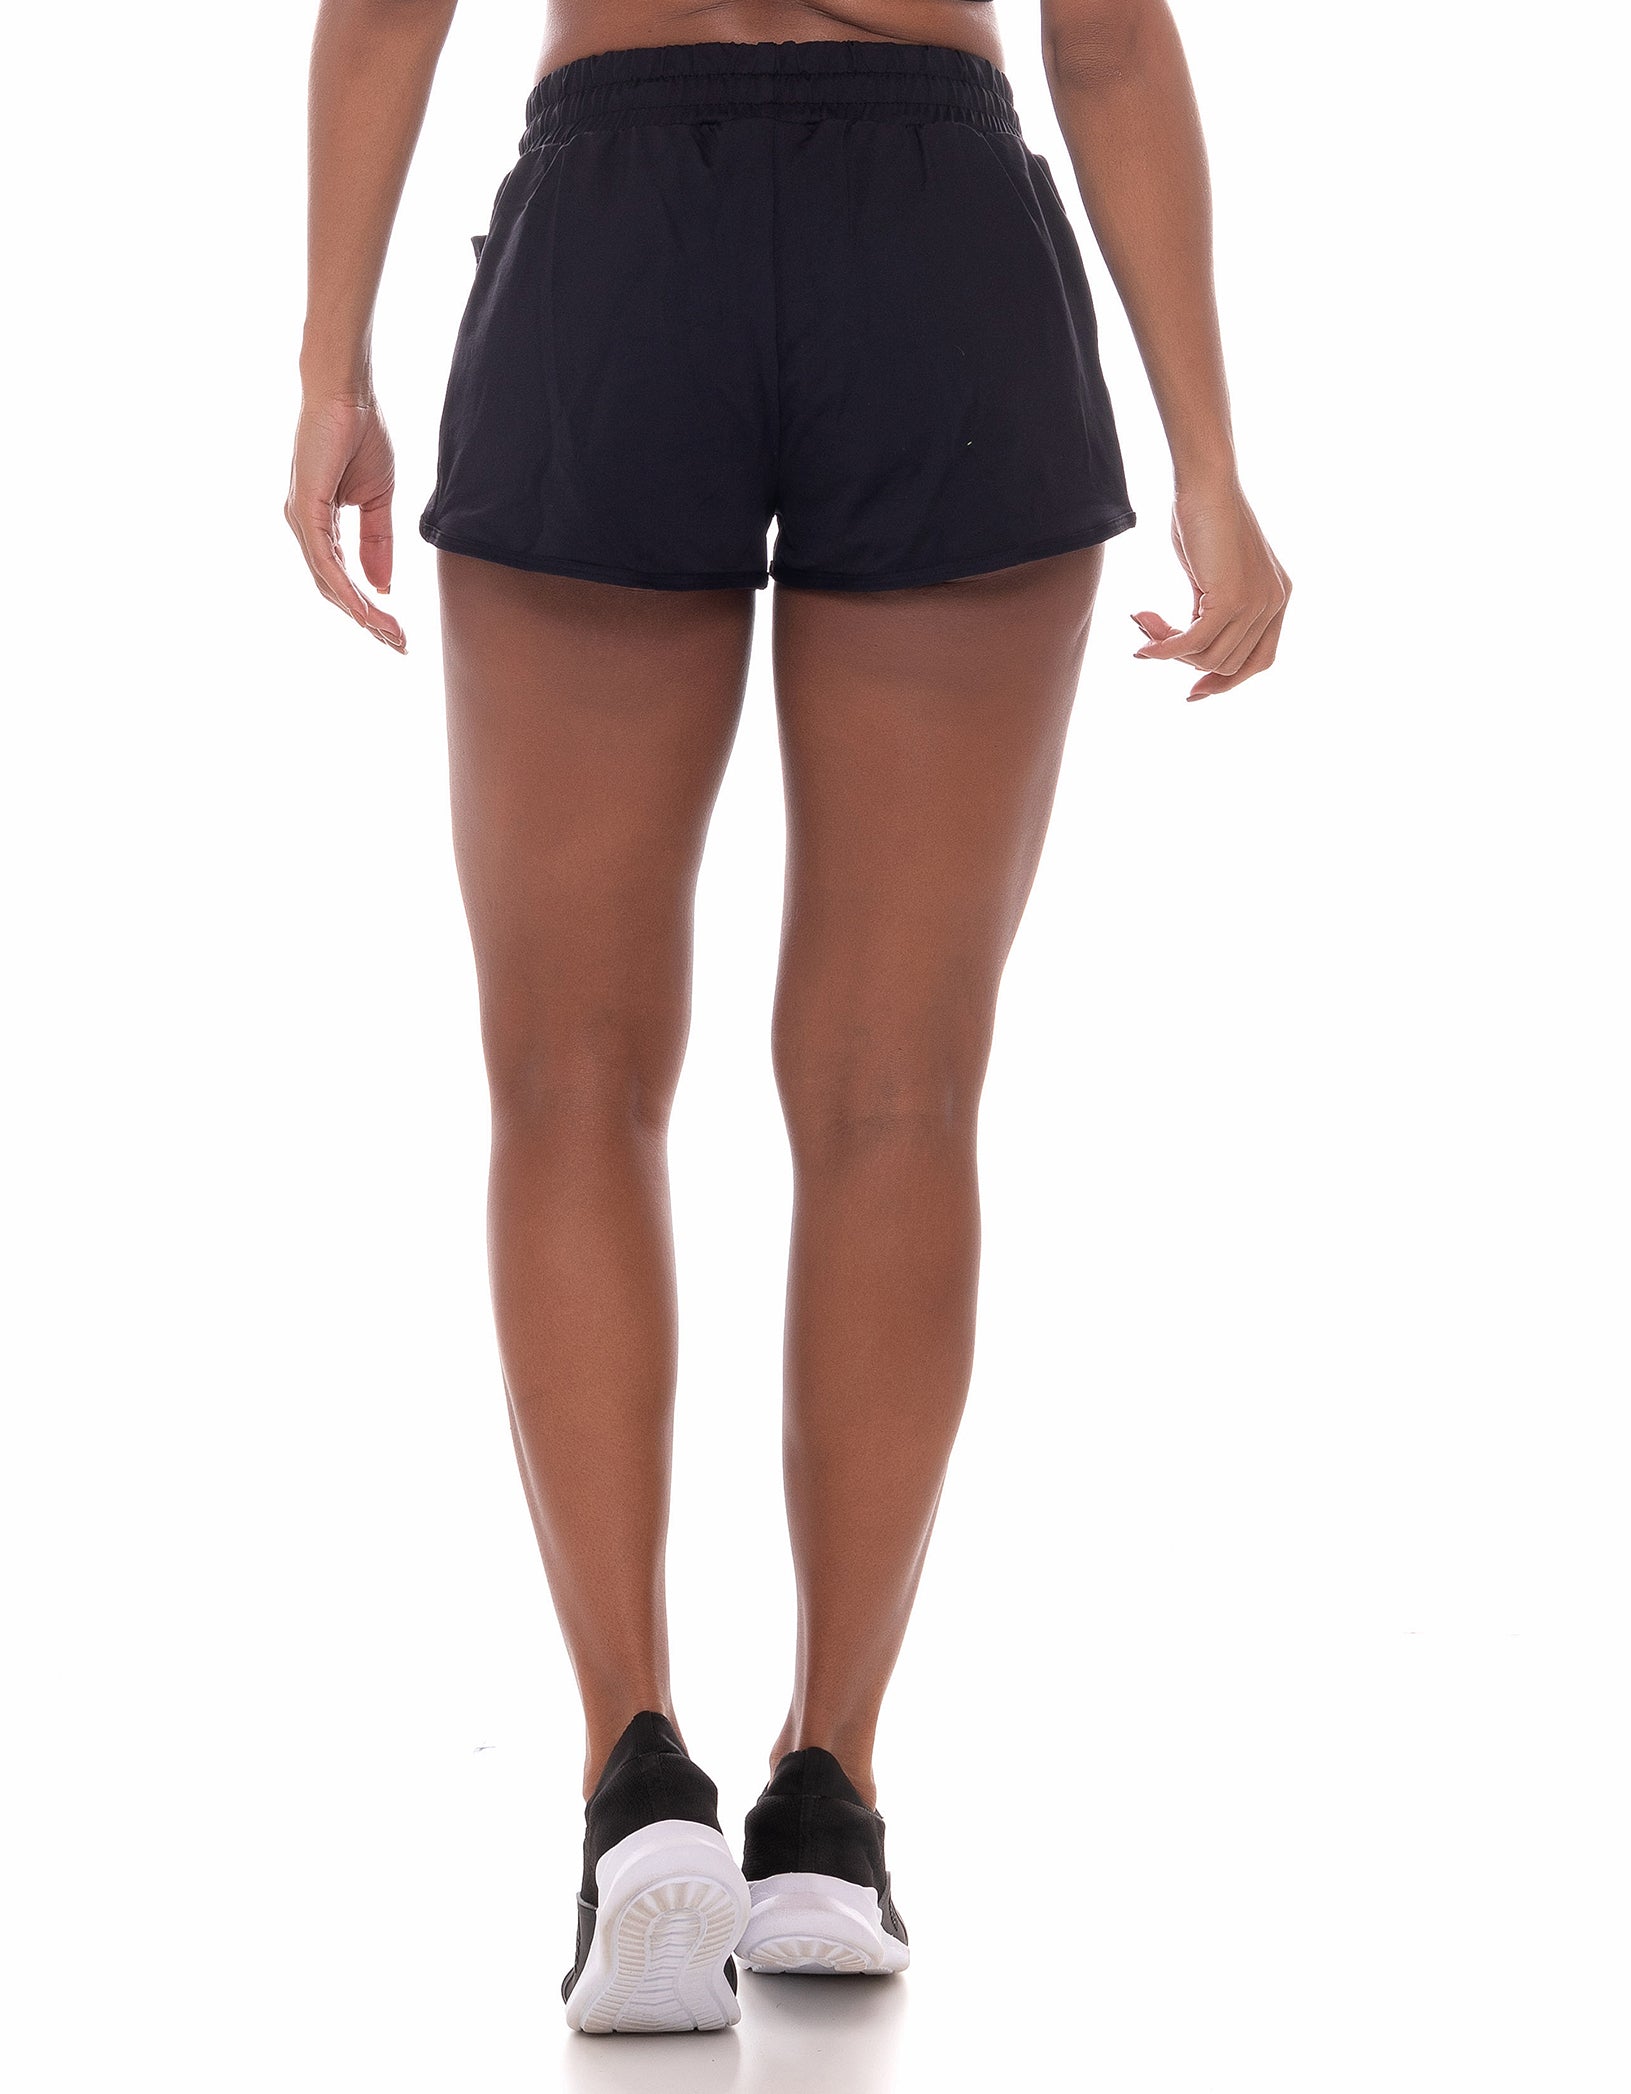 Vestem - New Luxor Black Shorts - SH371C0002